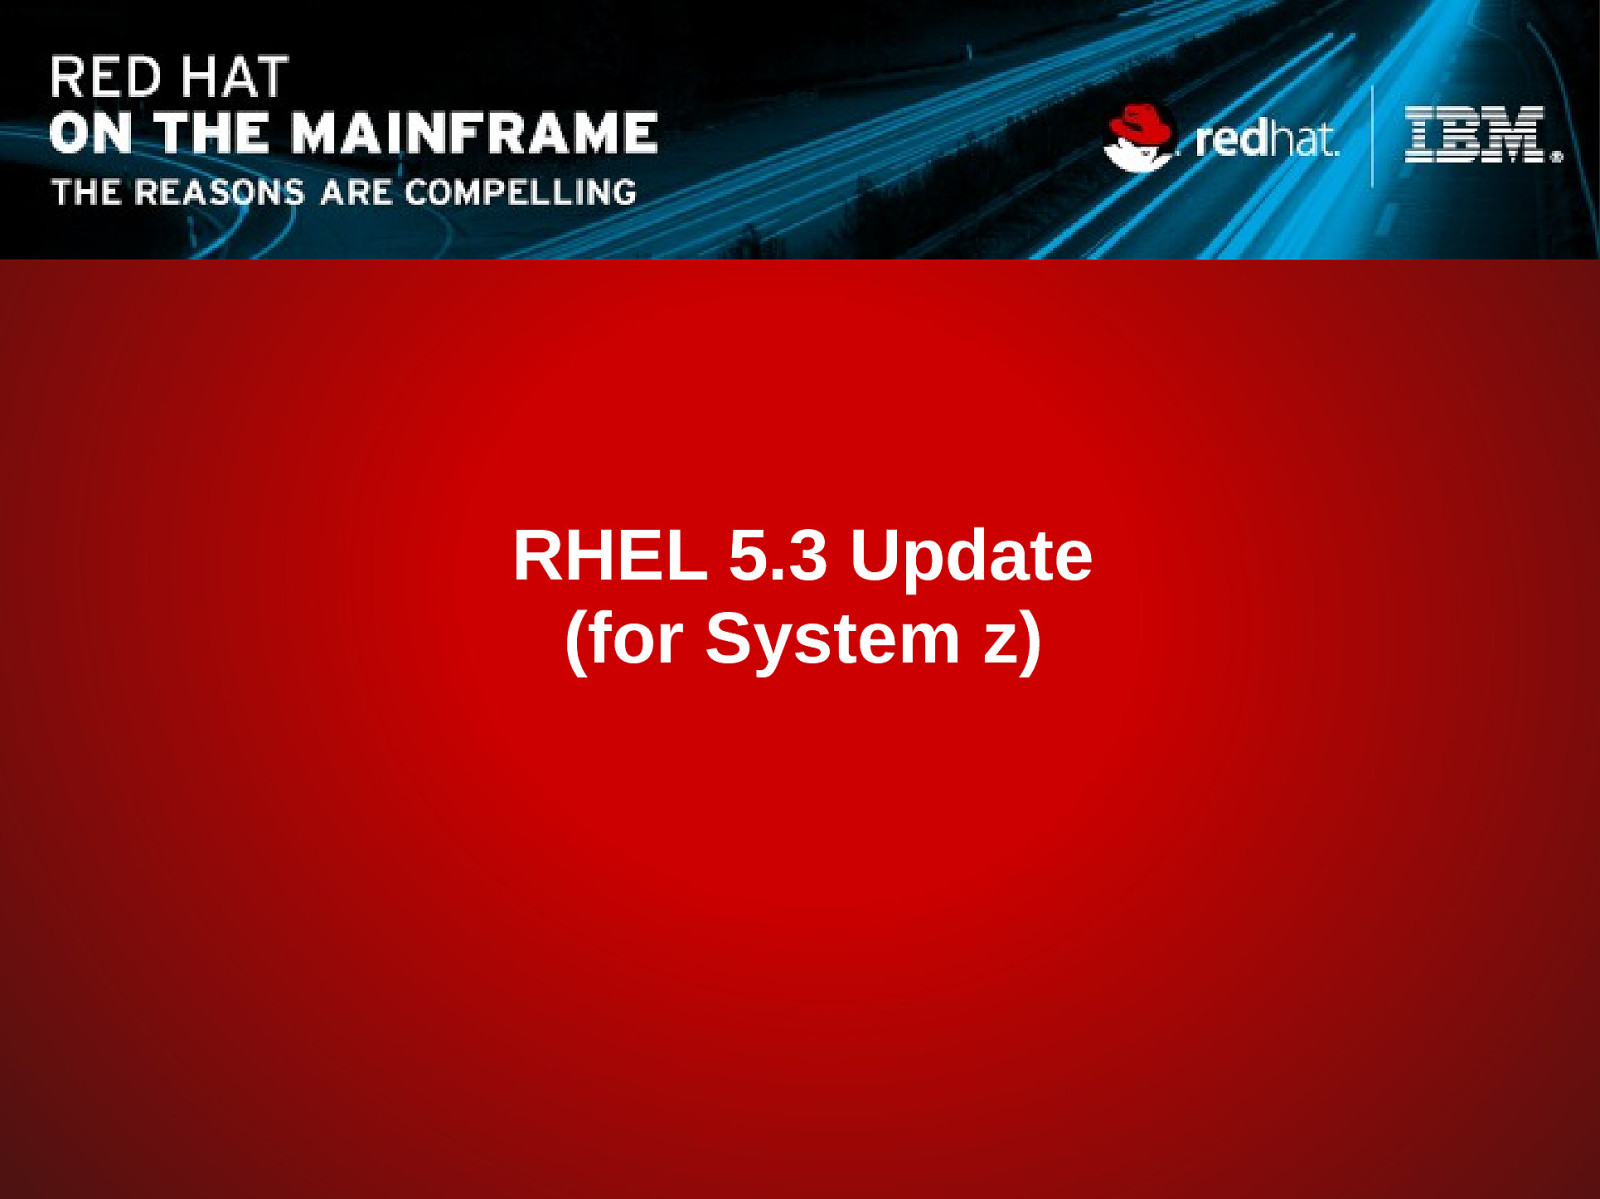 RHEL 5.3 Update for IBM System z